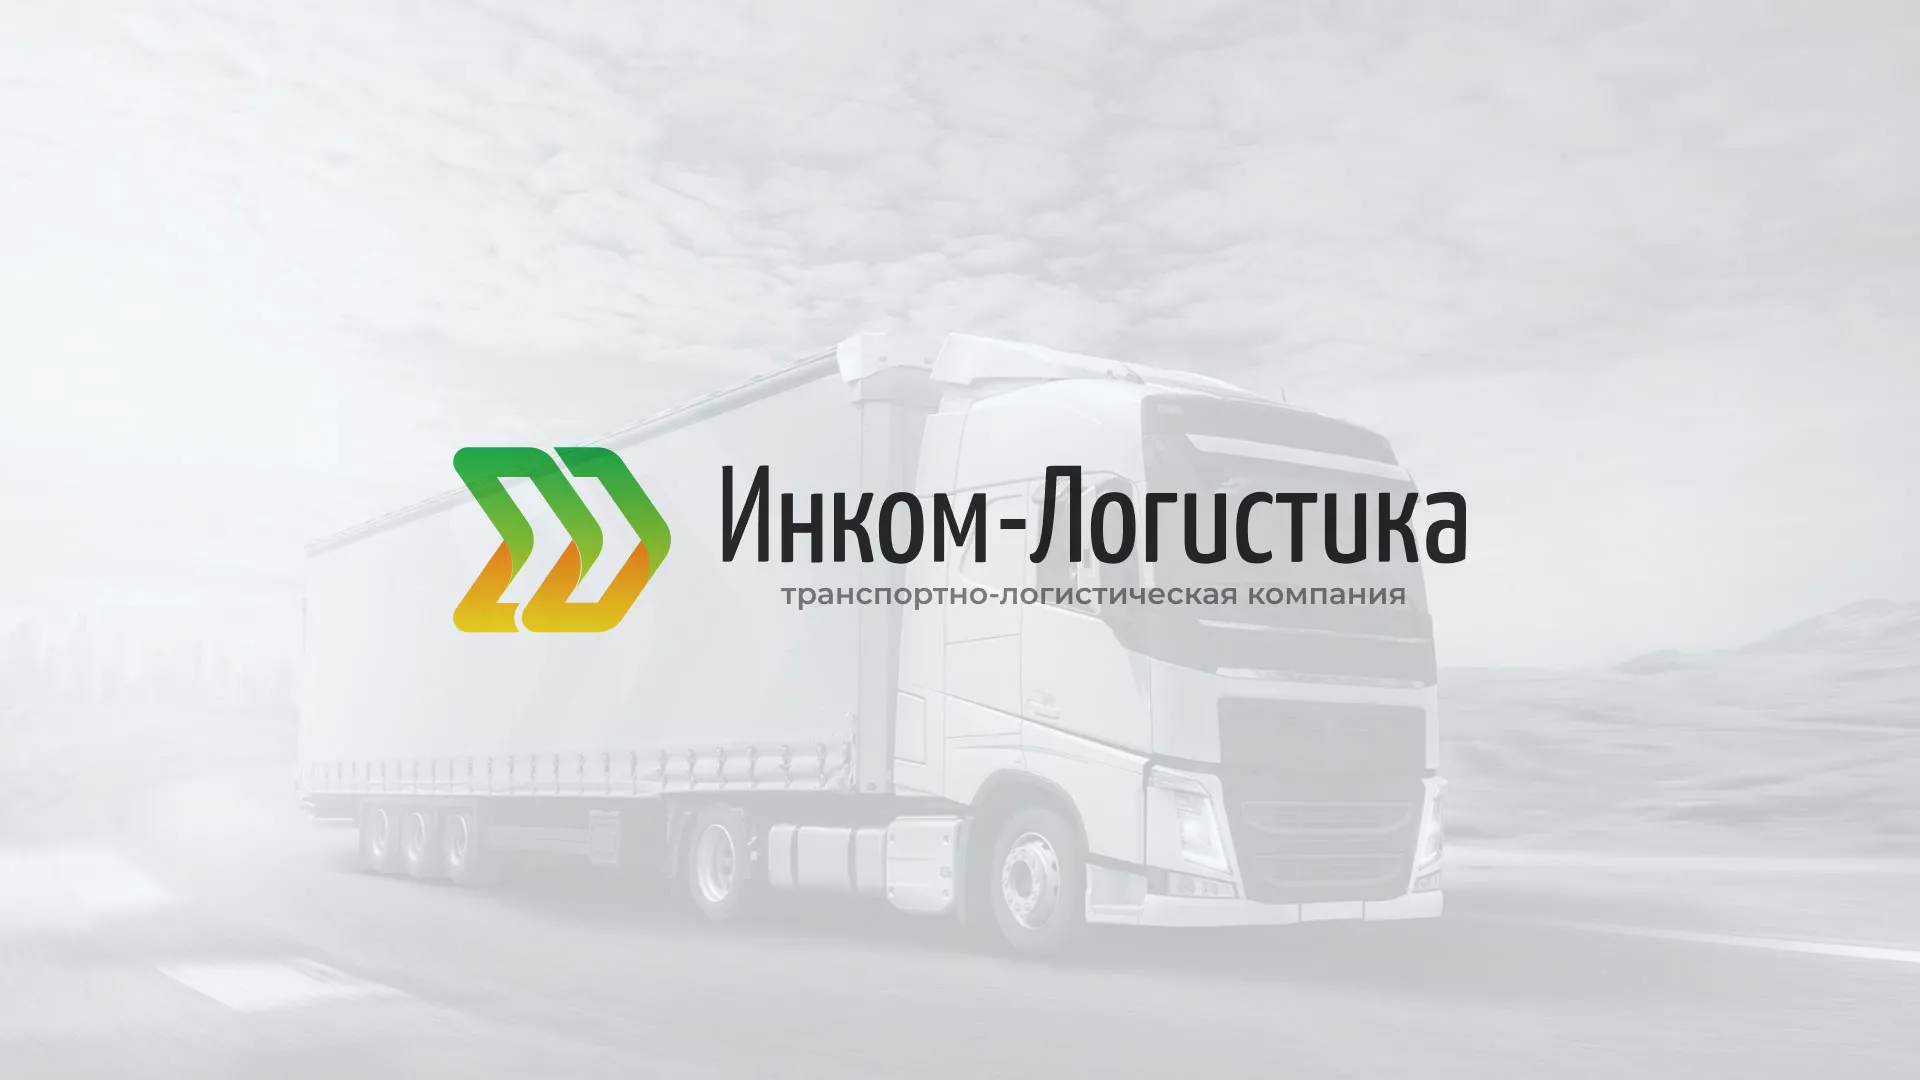 Разработка логотипа и сайта компании «Инком-Логистика» в Торжке